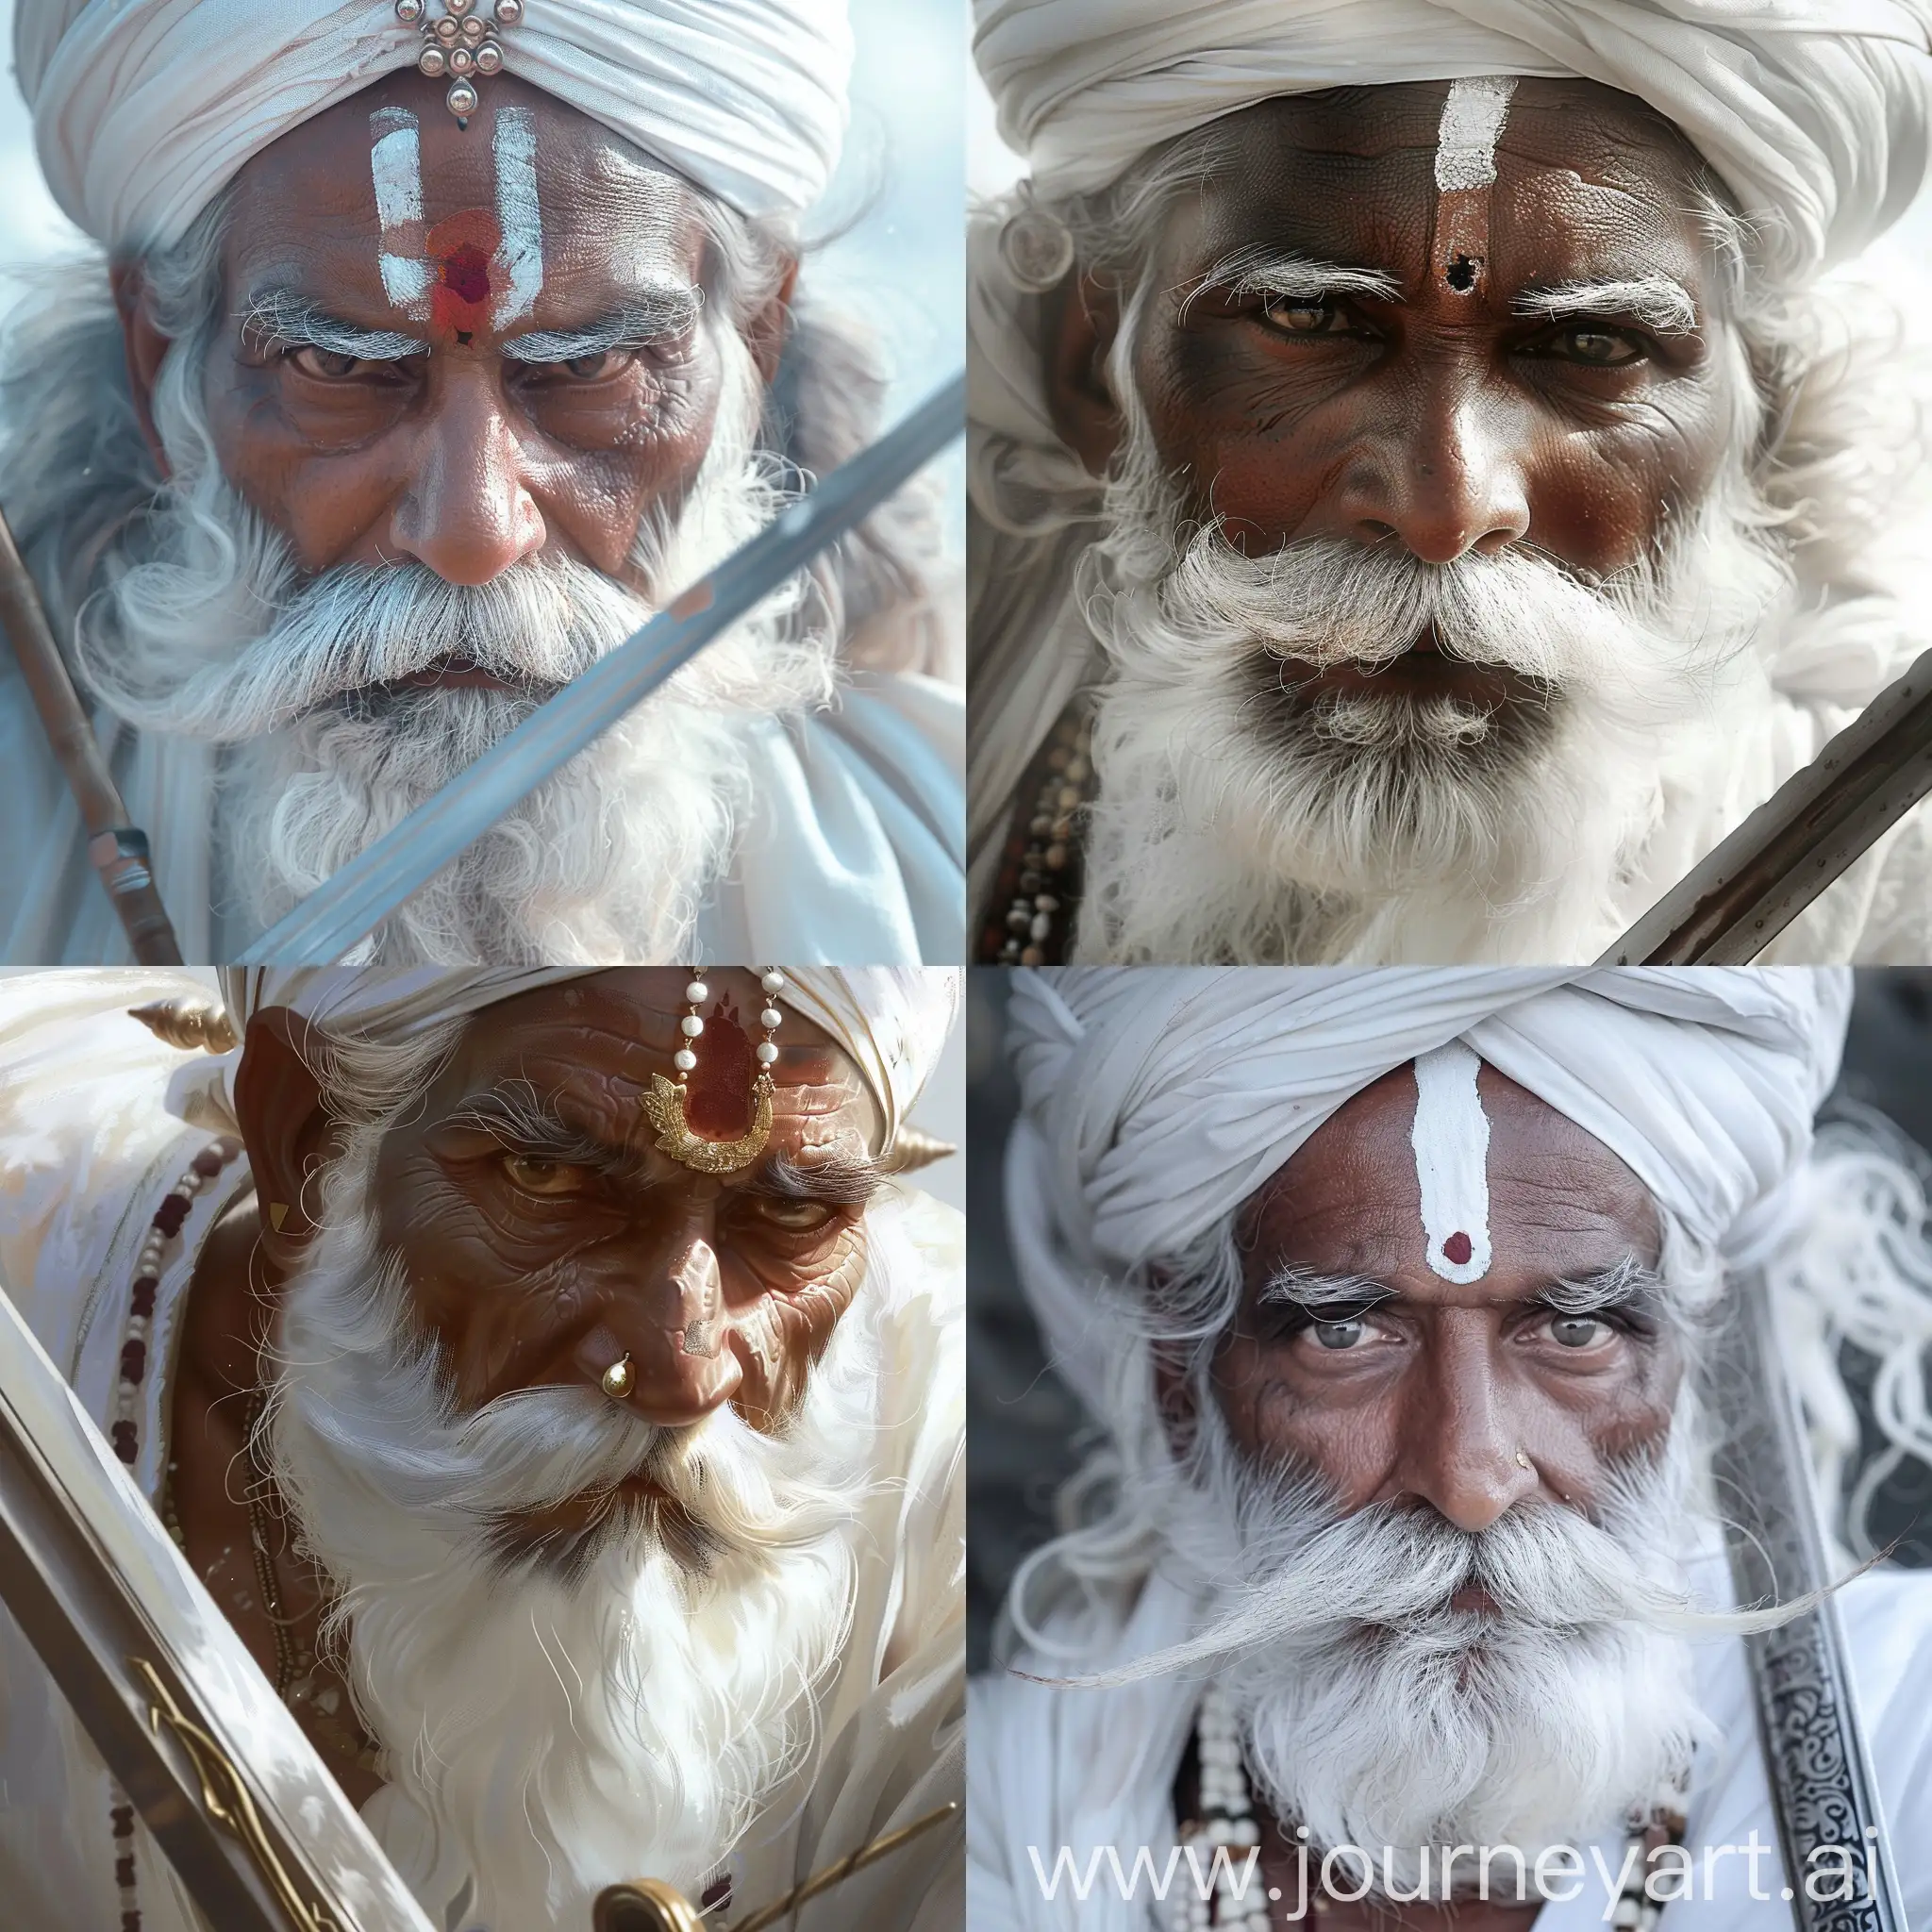 Year is 1700 CE. Imagine historical figure Durgadas Rathore, whIte moustache and beard, white rajasthani saafa on head, eyes like buddha, white clothes, calm, has a sword in hand.